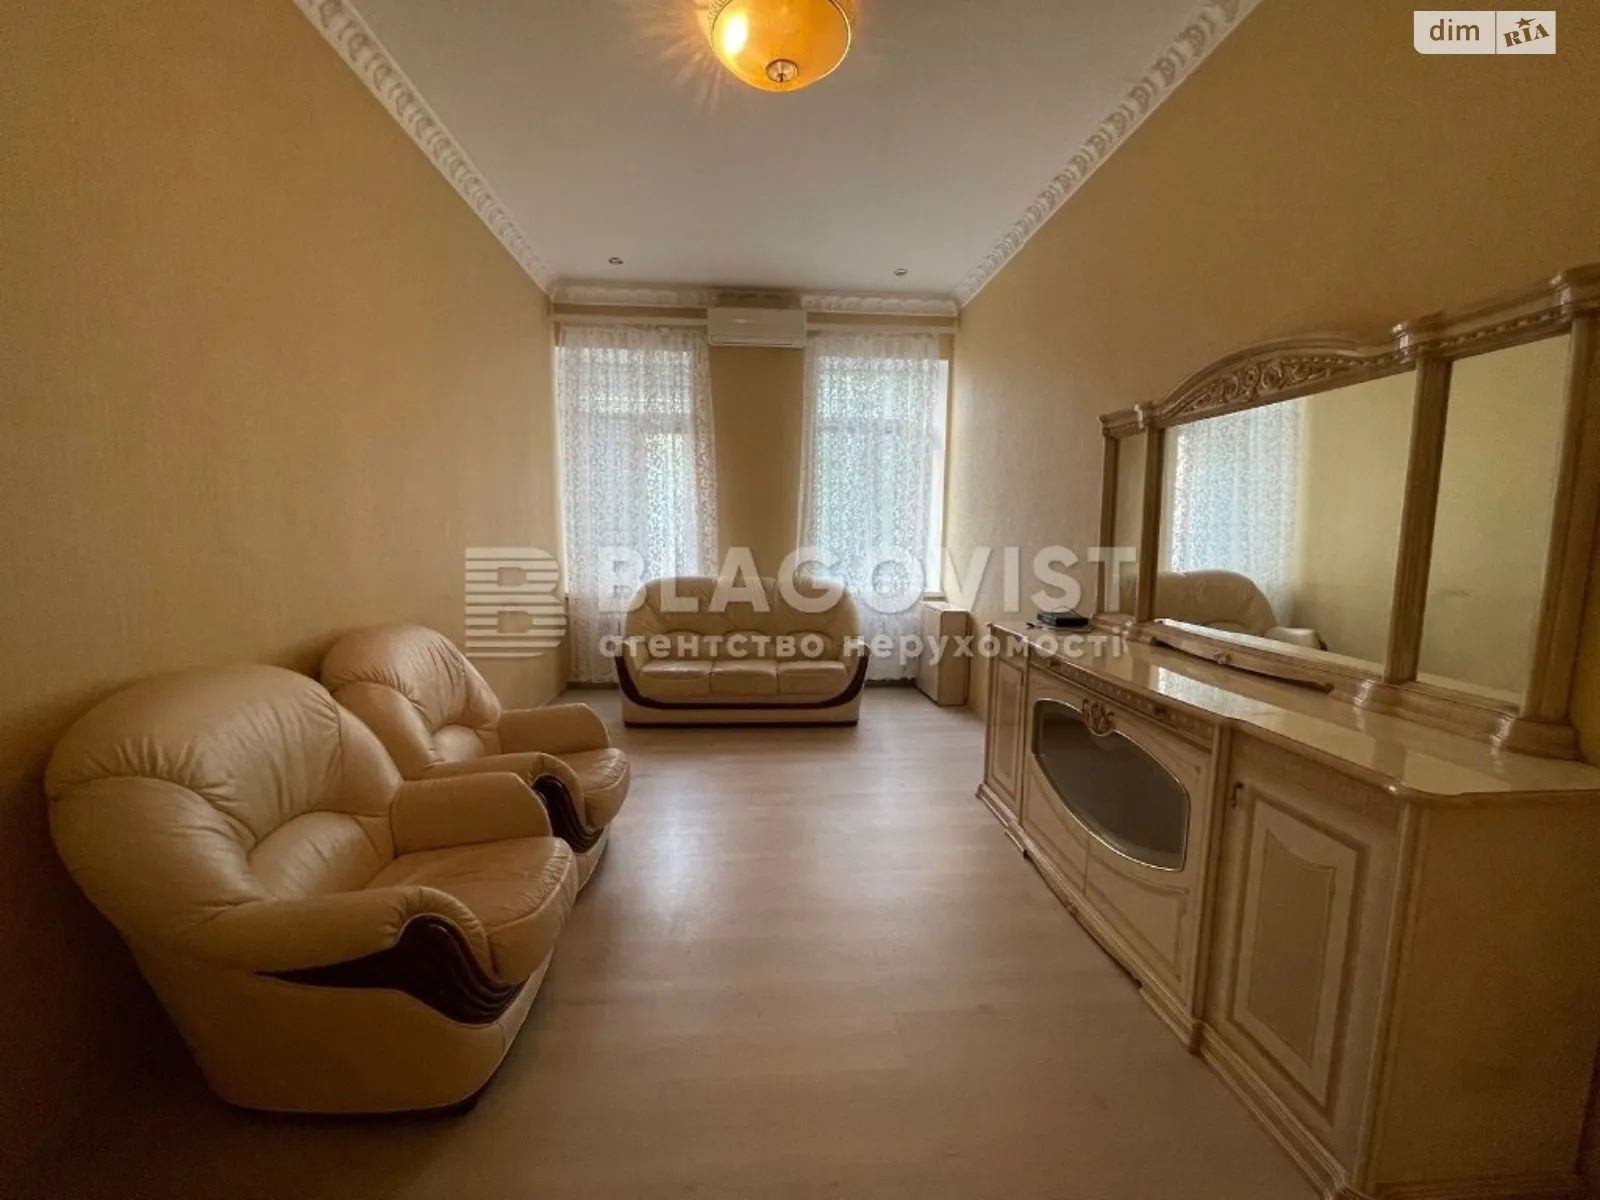 Продается комната 57 кв. м в Киеве, цена: 98000 $ - фото 1